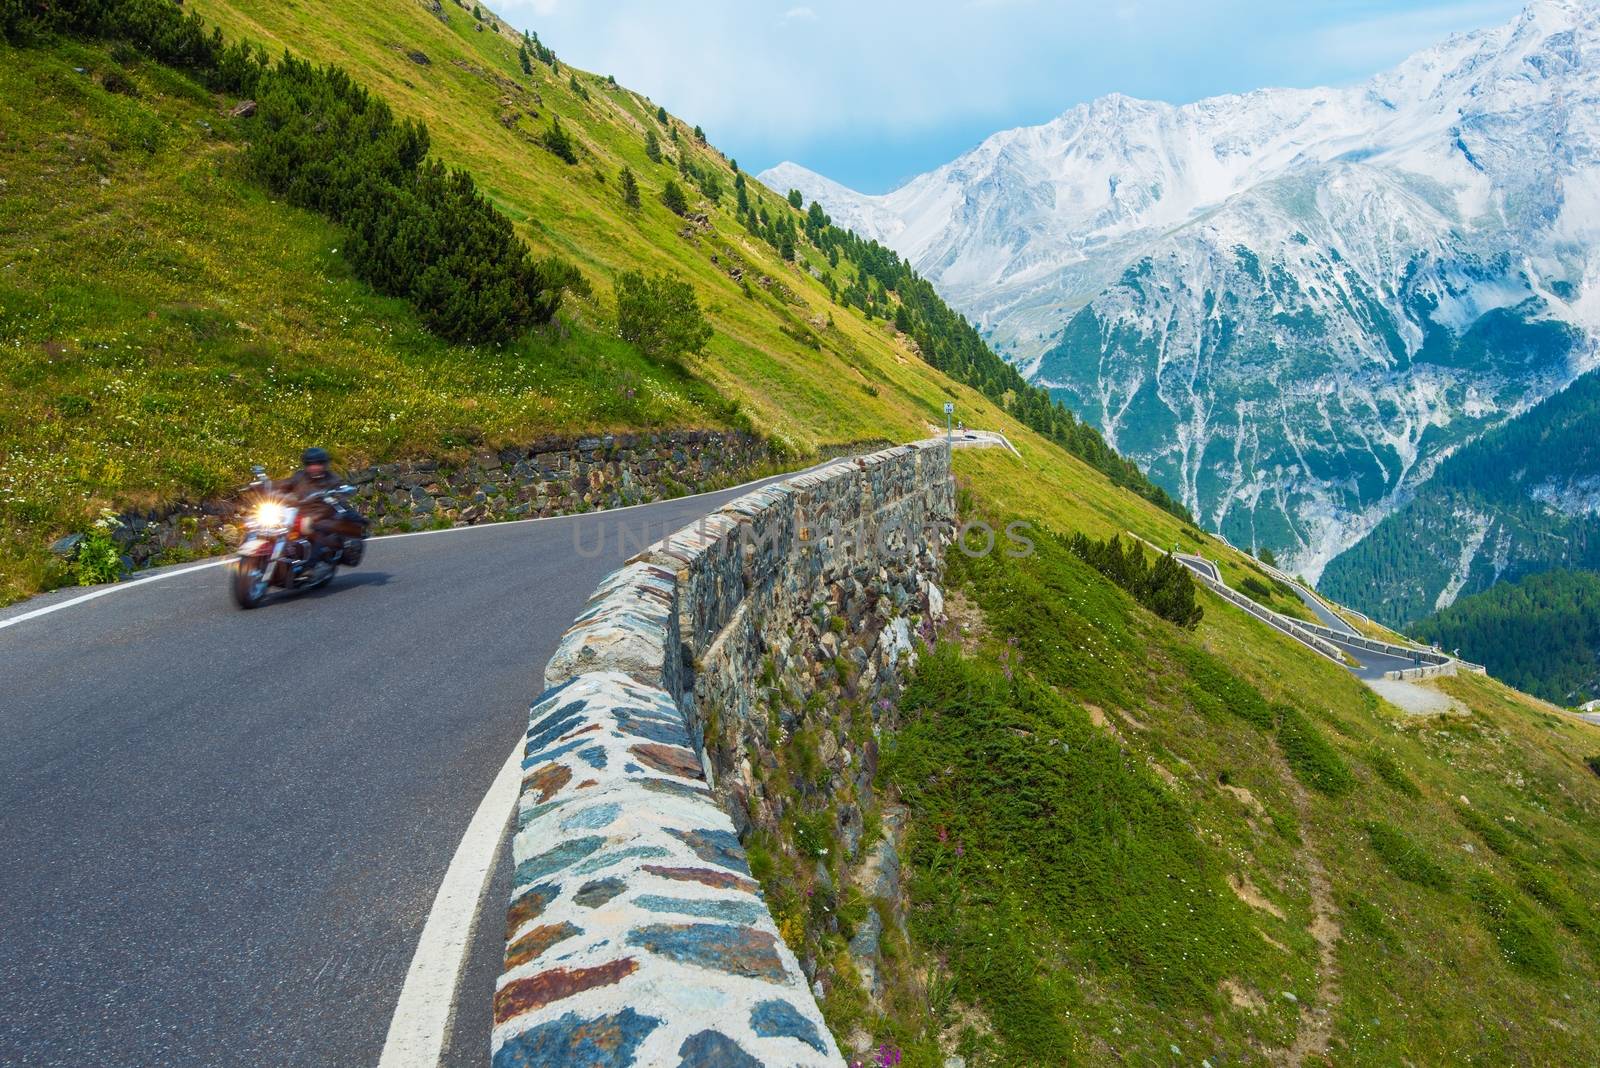 Alpine Road Biker. Motorcycle on the Stelvio Pass, Italy, Europe. Scenic Italian Mountains Road.